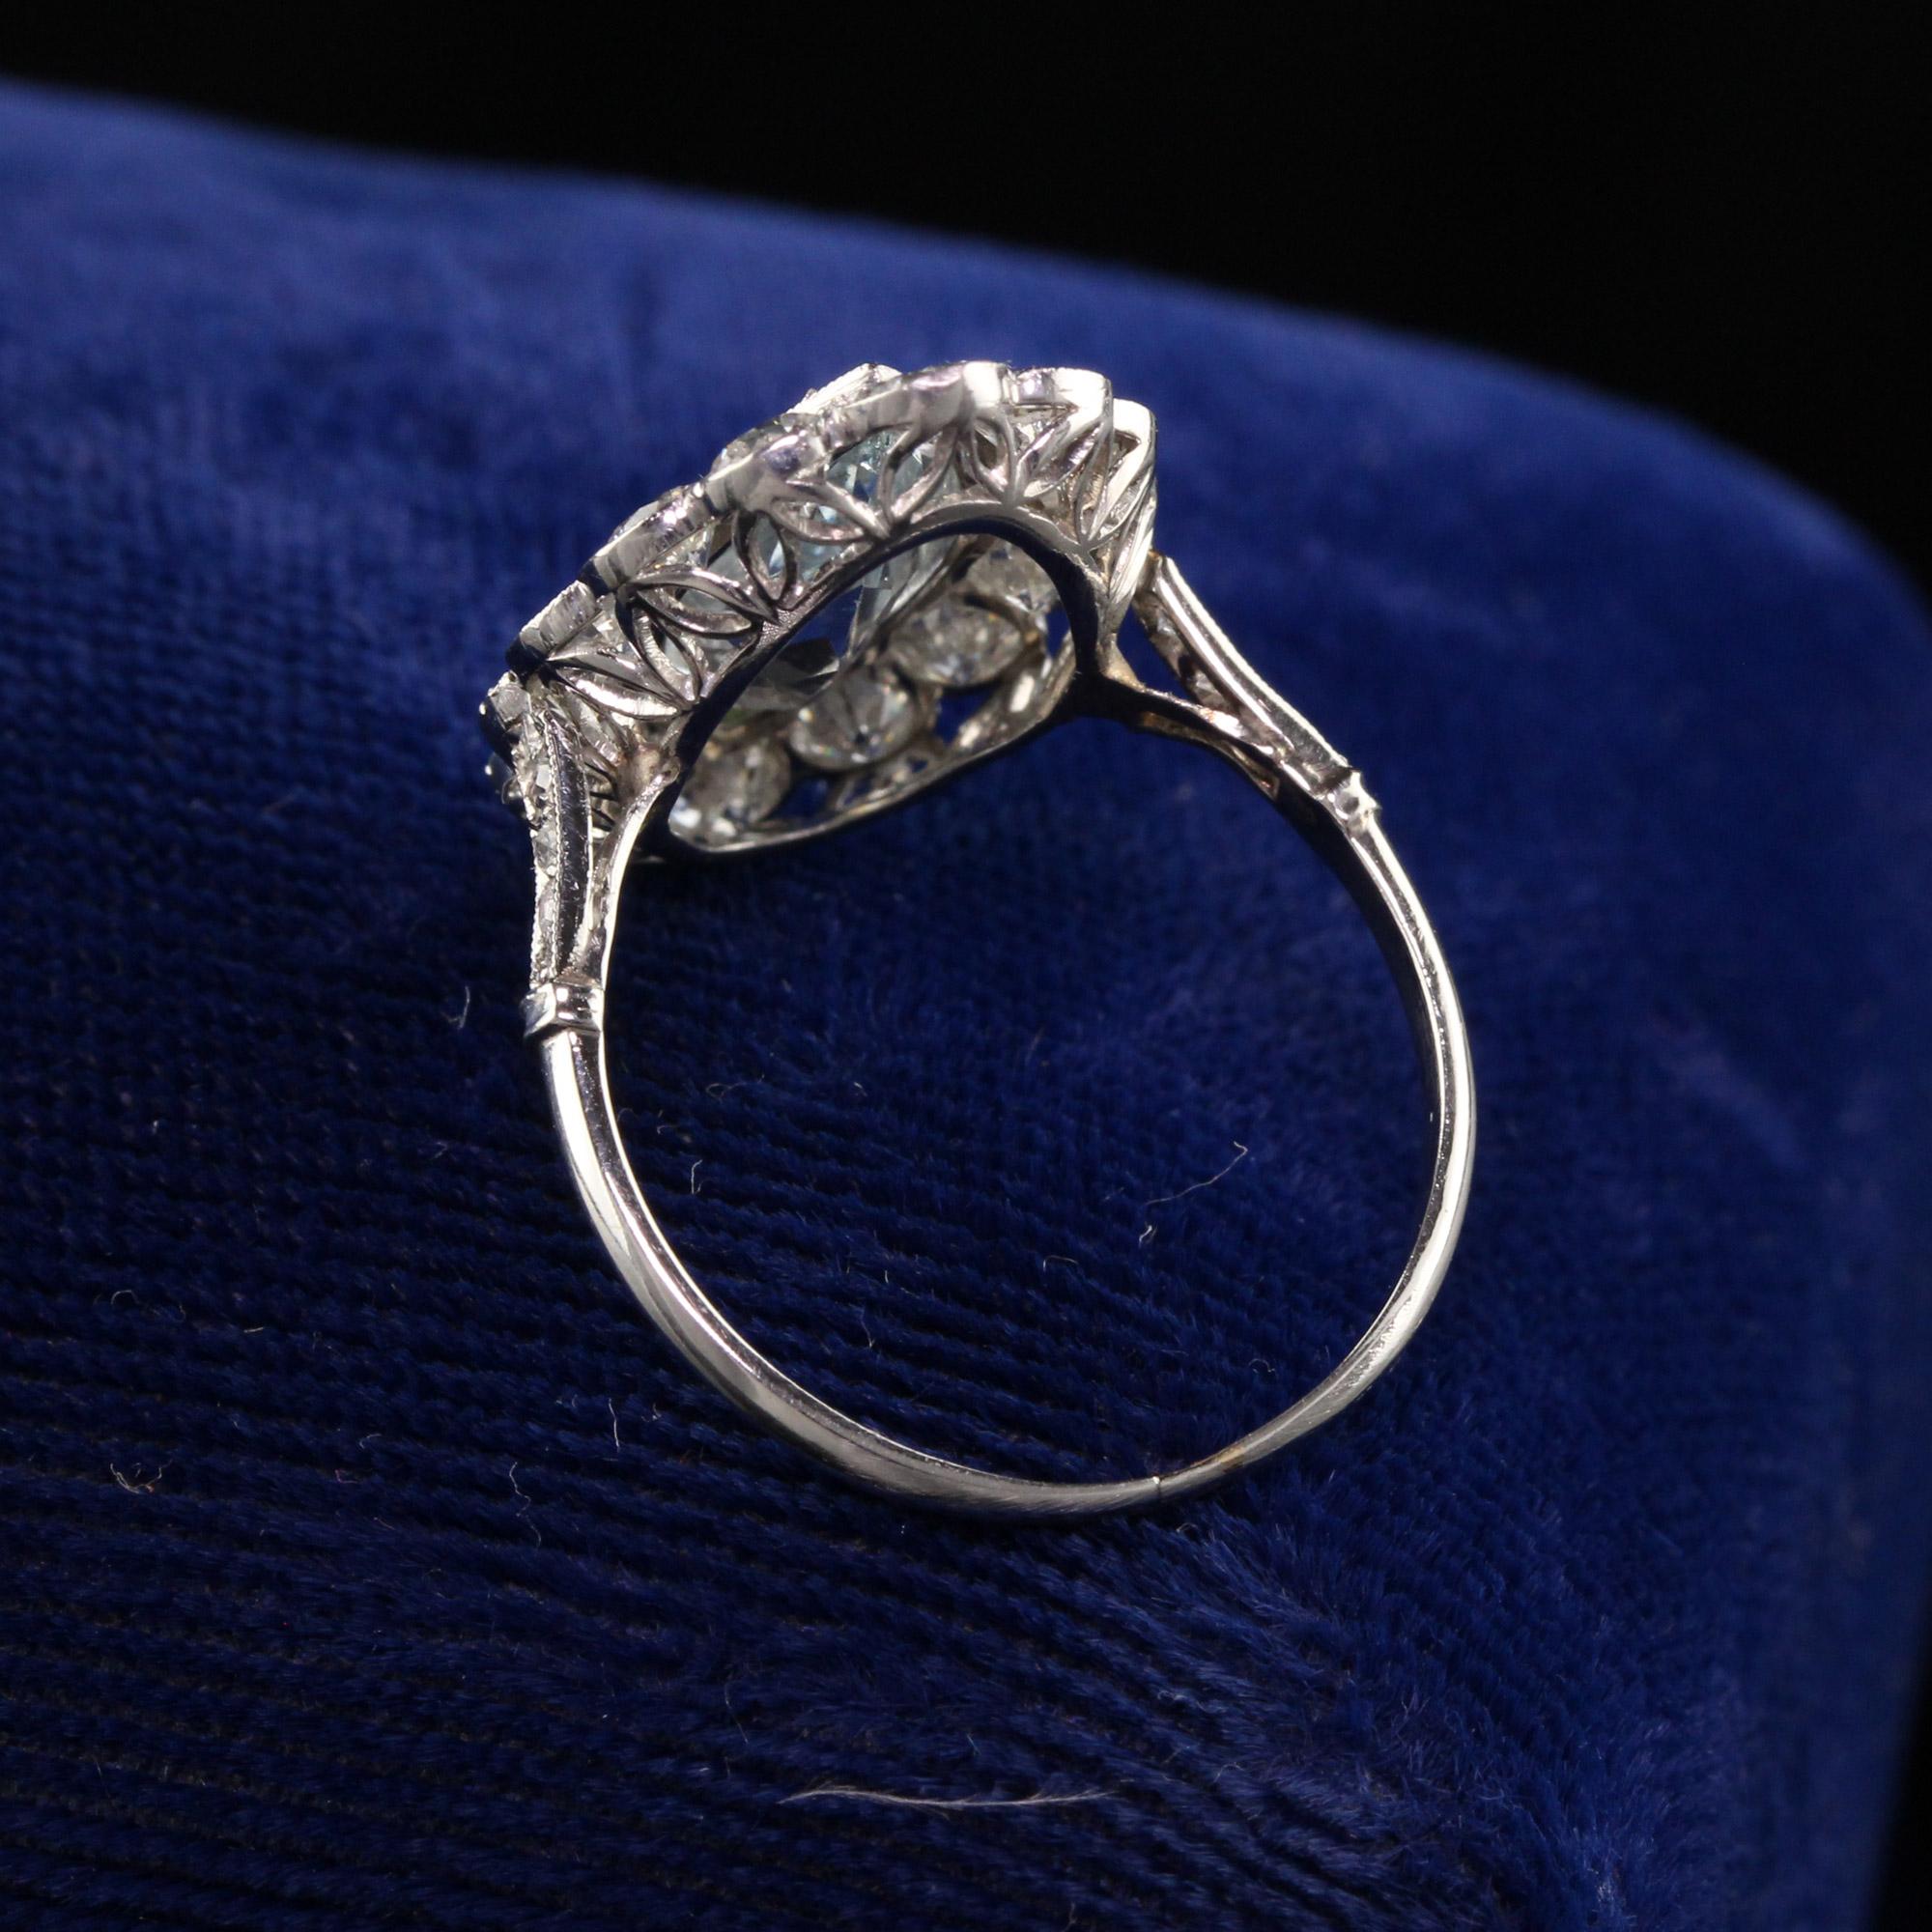 Beautiful Antique Art Deco Platinum Aquamarine Old European Engagement Ring. This magnificent ring has a marquise cut aquamarine in the center surrounded by old european cut diamonds around it.

Item #R0960

Metal: Platinum

Weight: 4.7